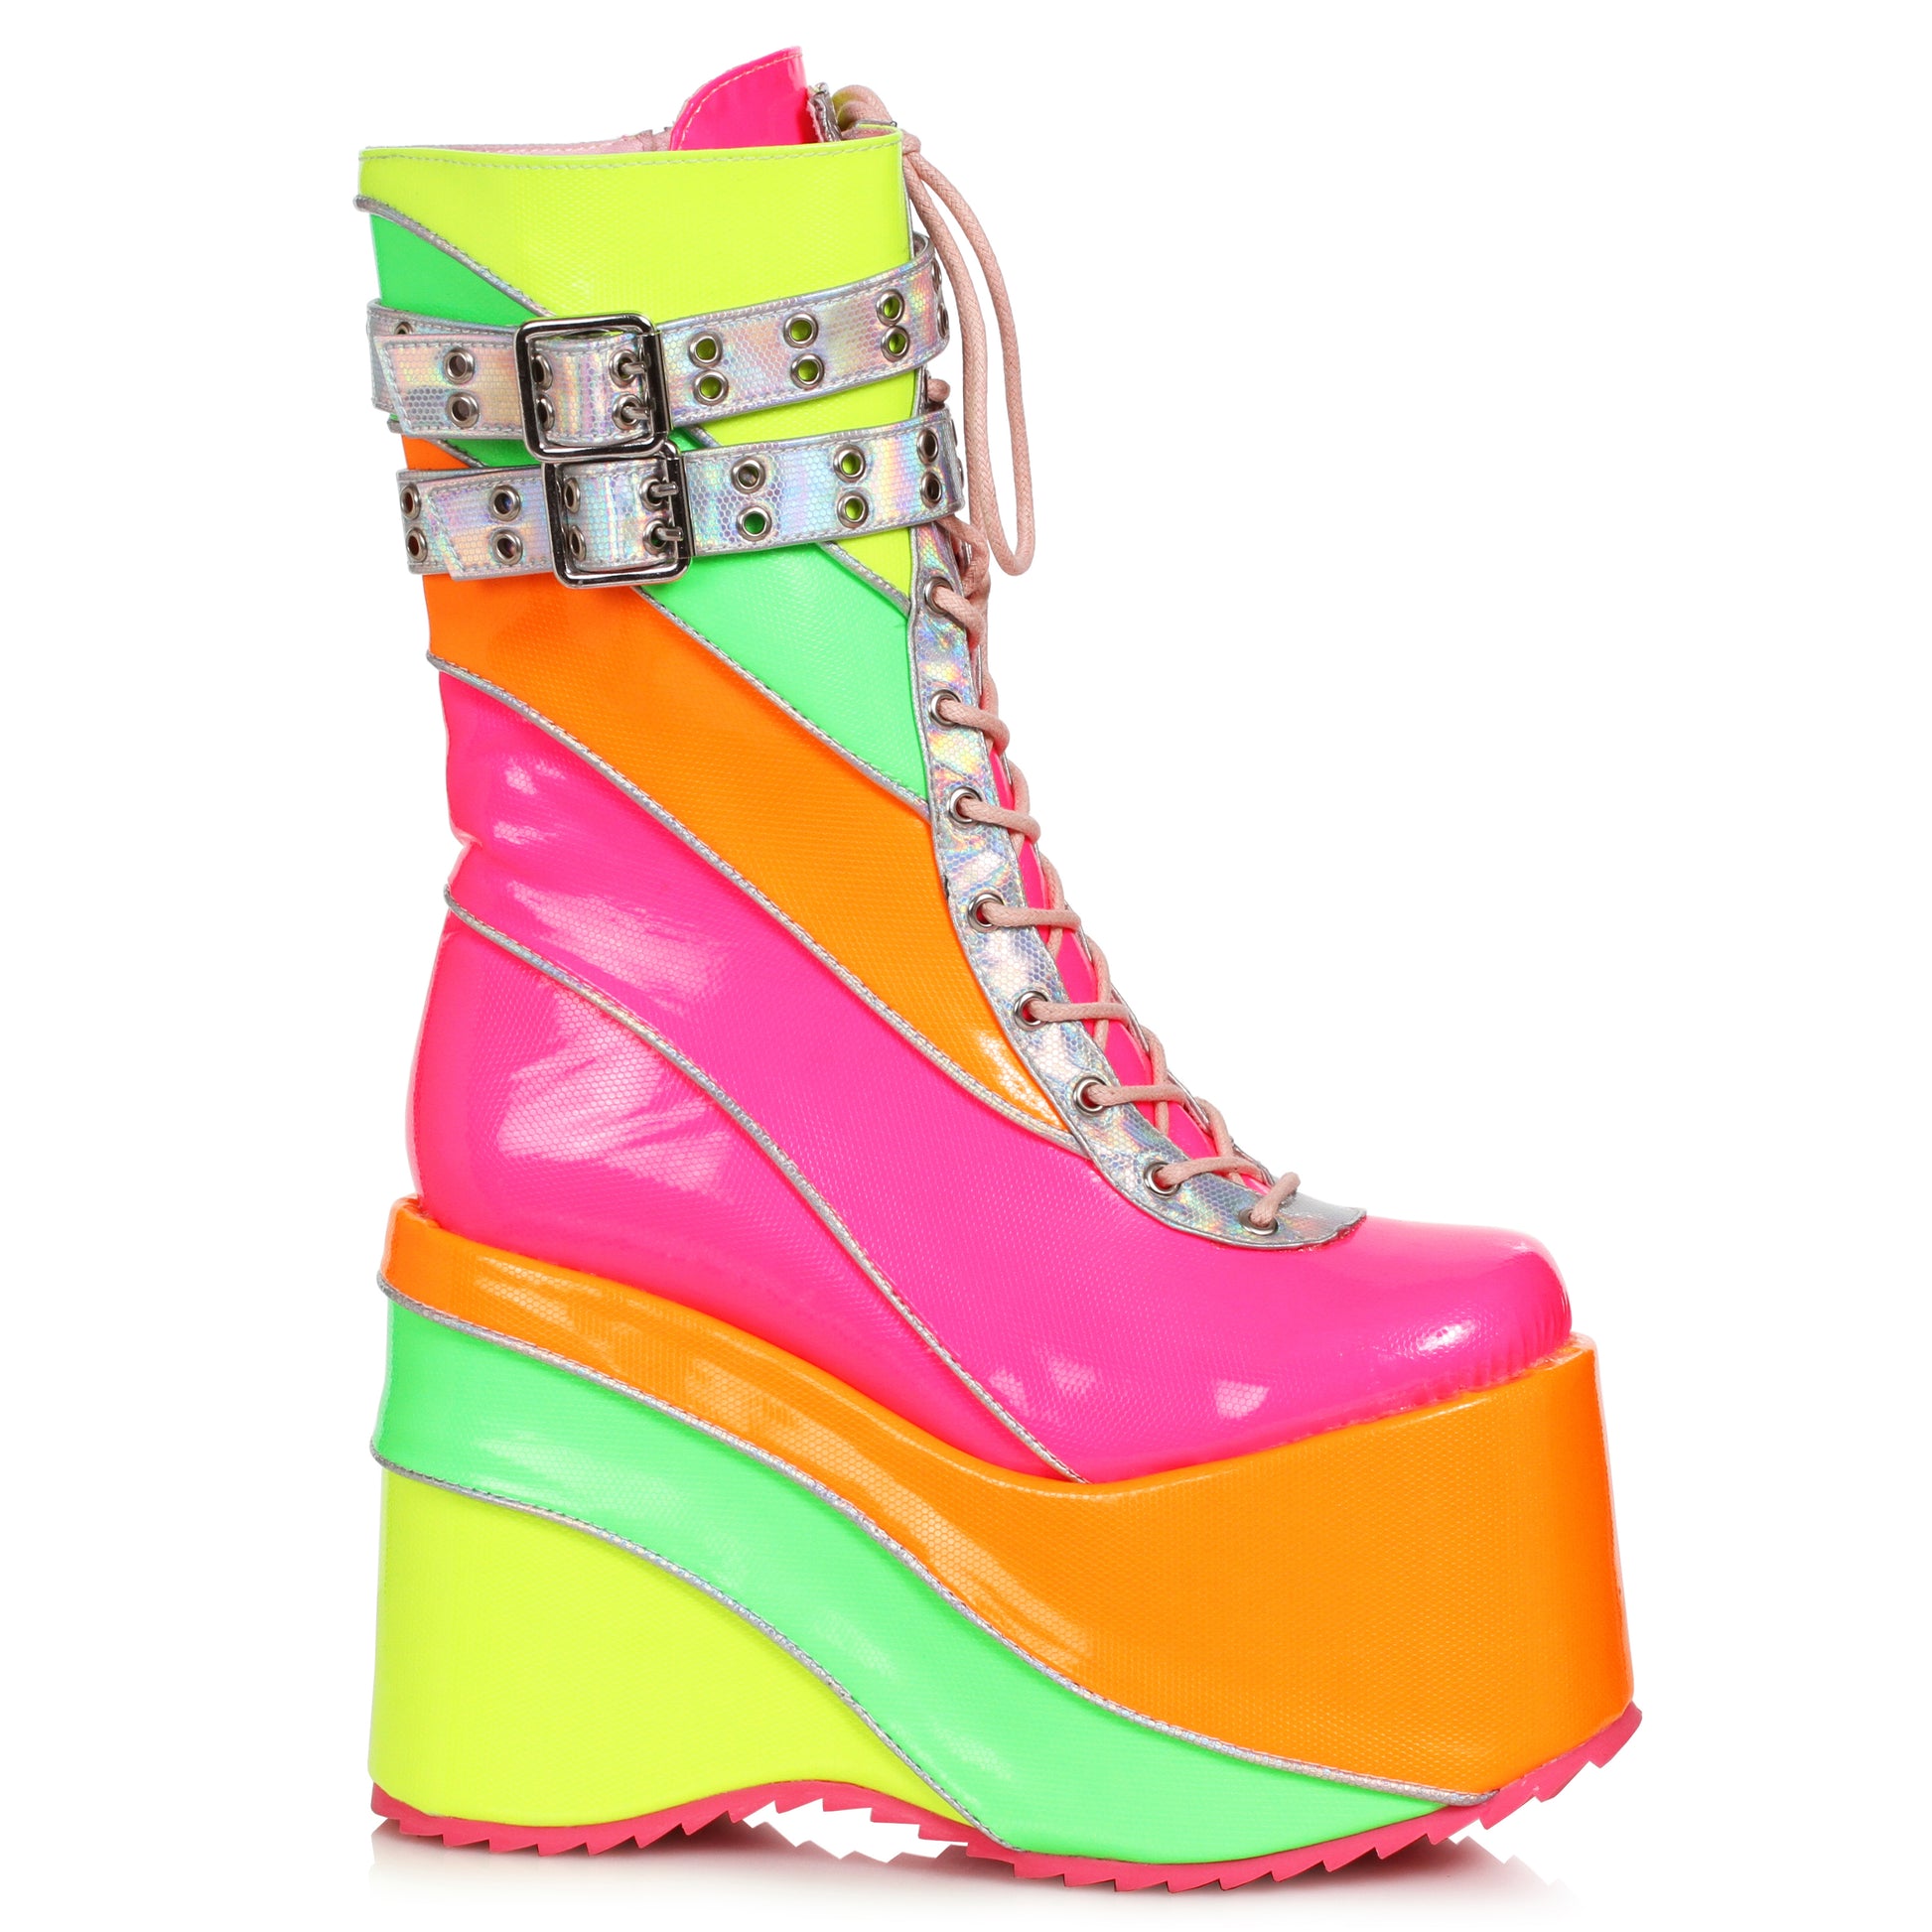 500-SHARLA Ellie Shoes 5" Chunky Heel Platform Boot FESTIVAL 5 INCH HEEL